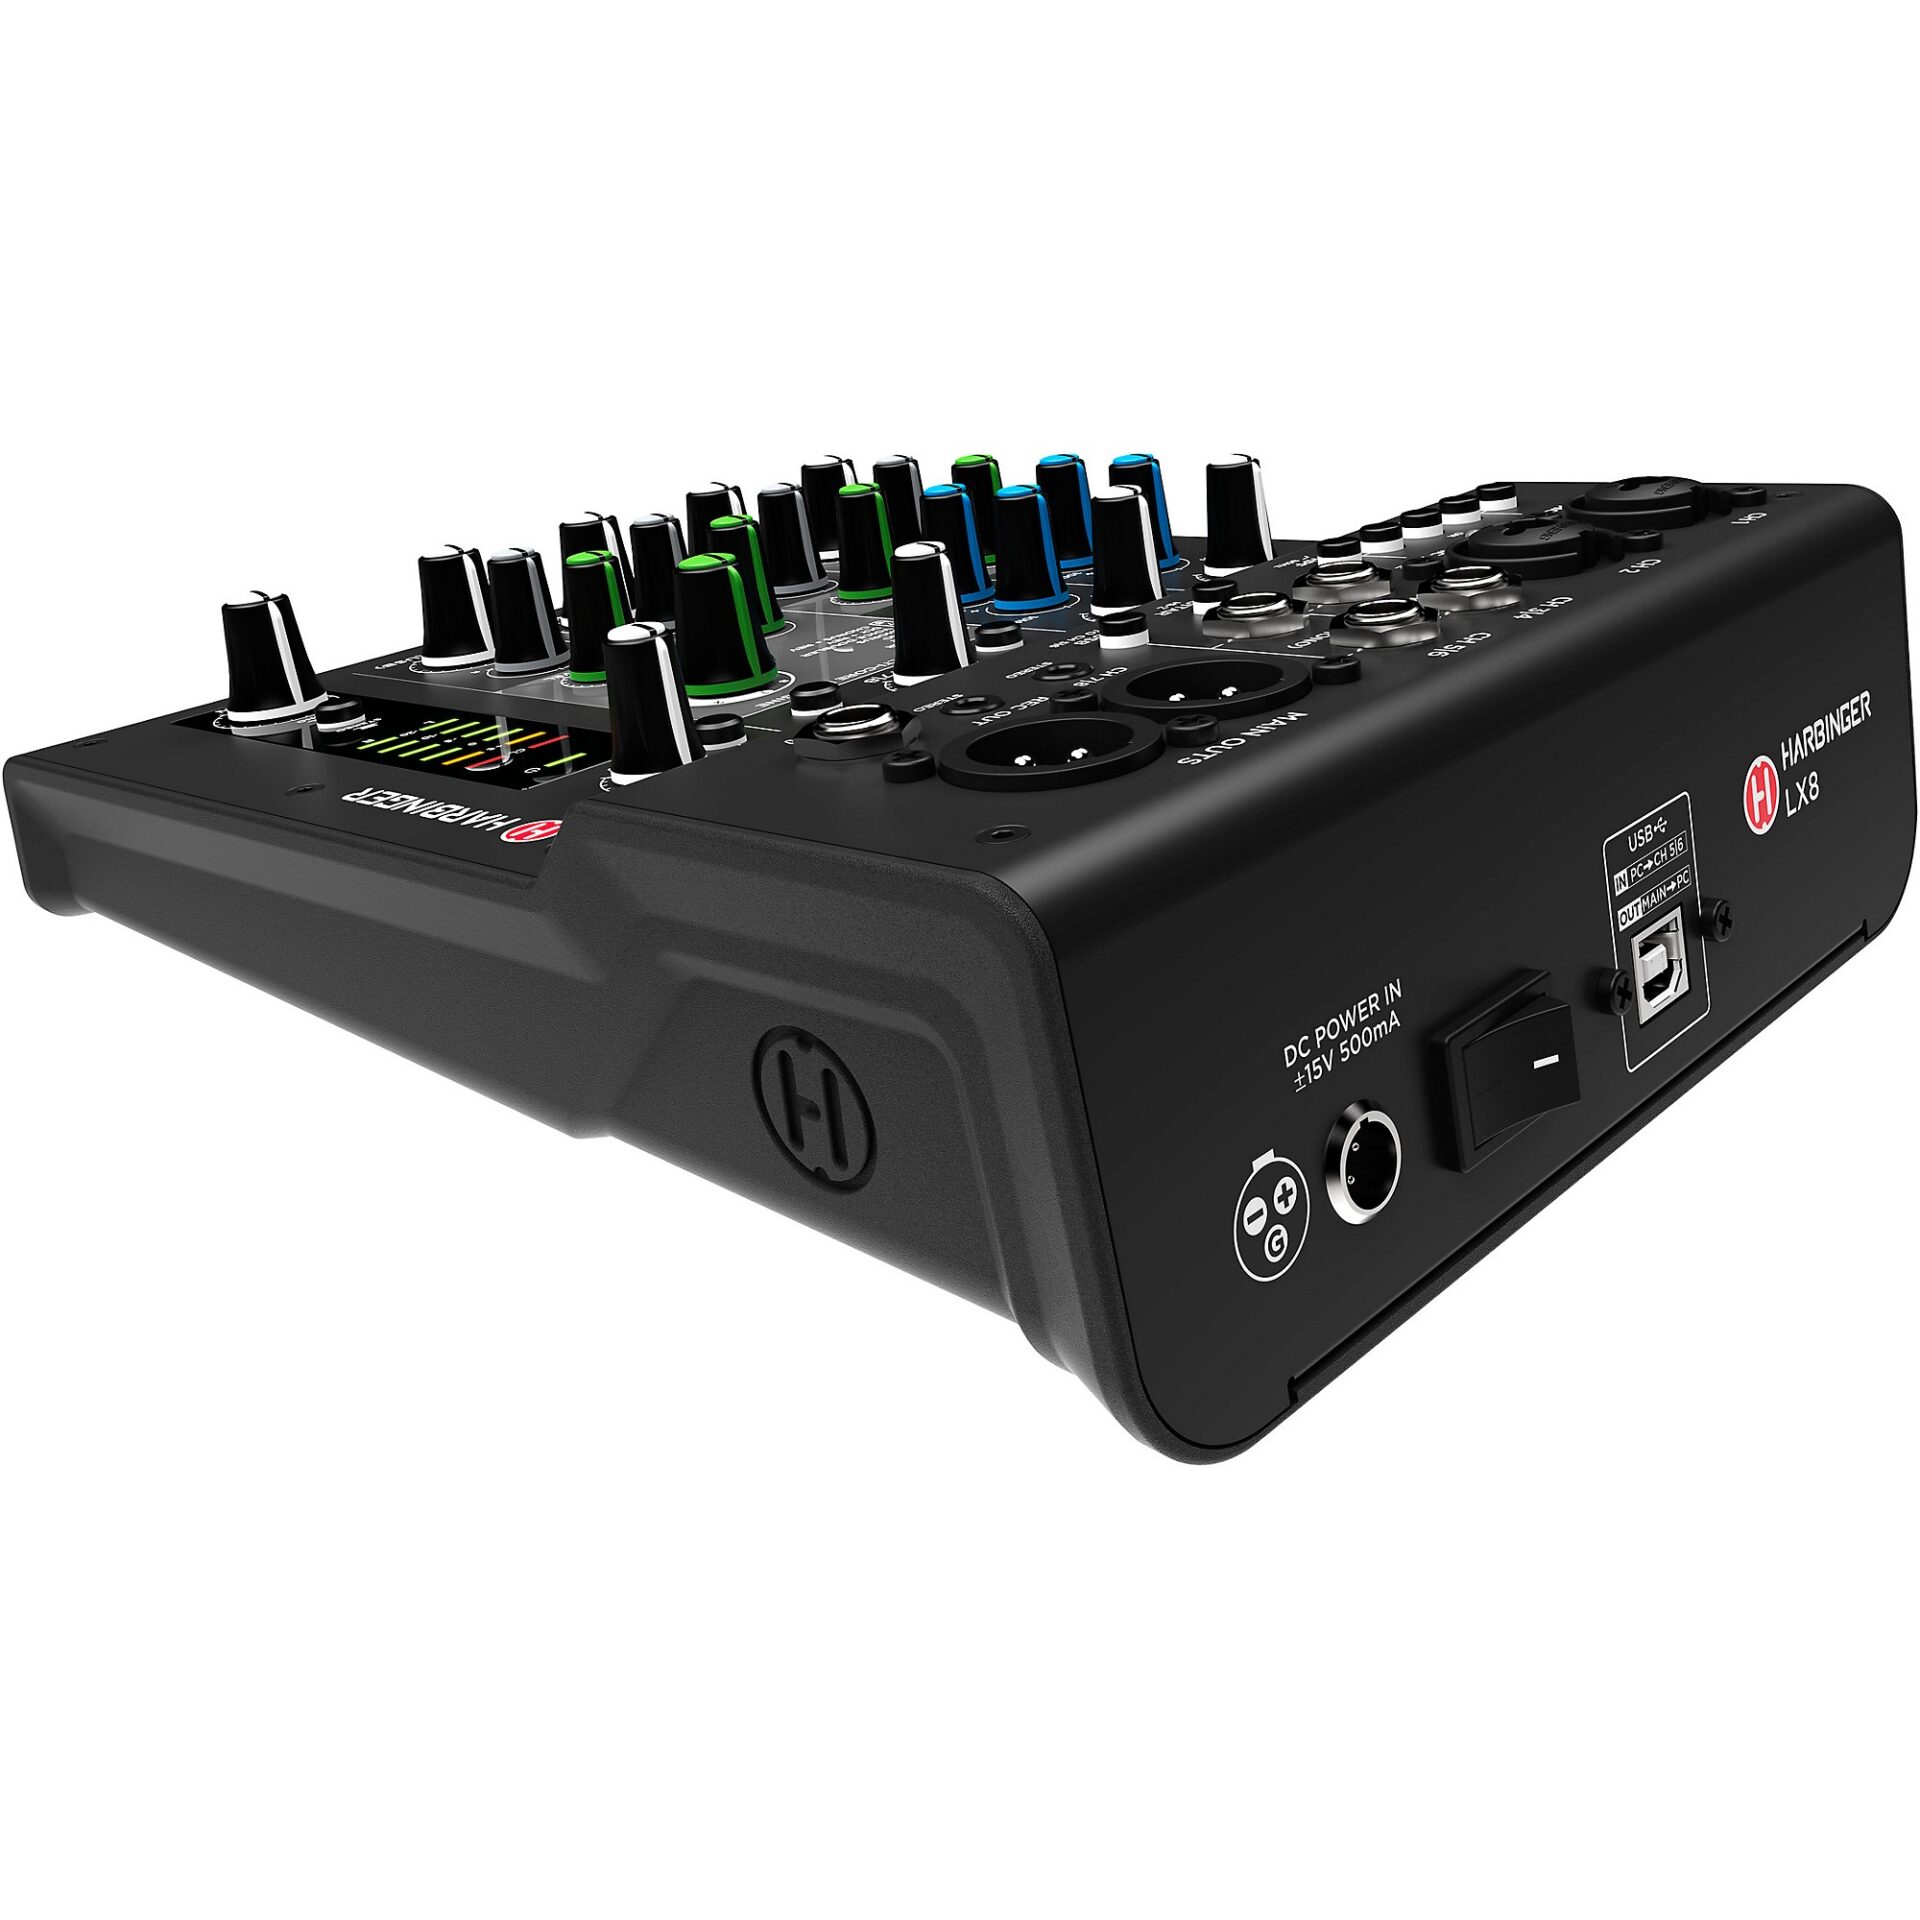 Harbinger LVL series LV8 8 channel mixer w/ Bluetooth 2022 - Black